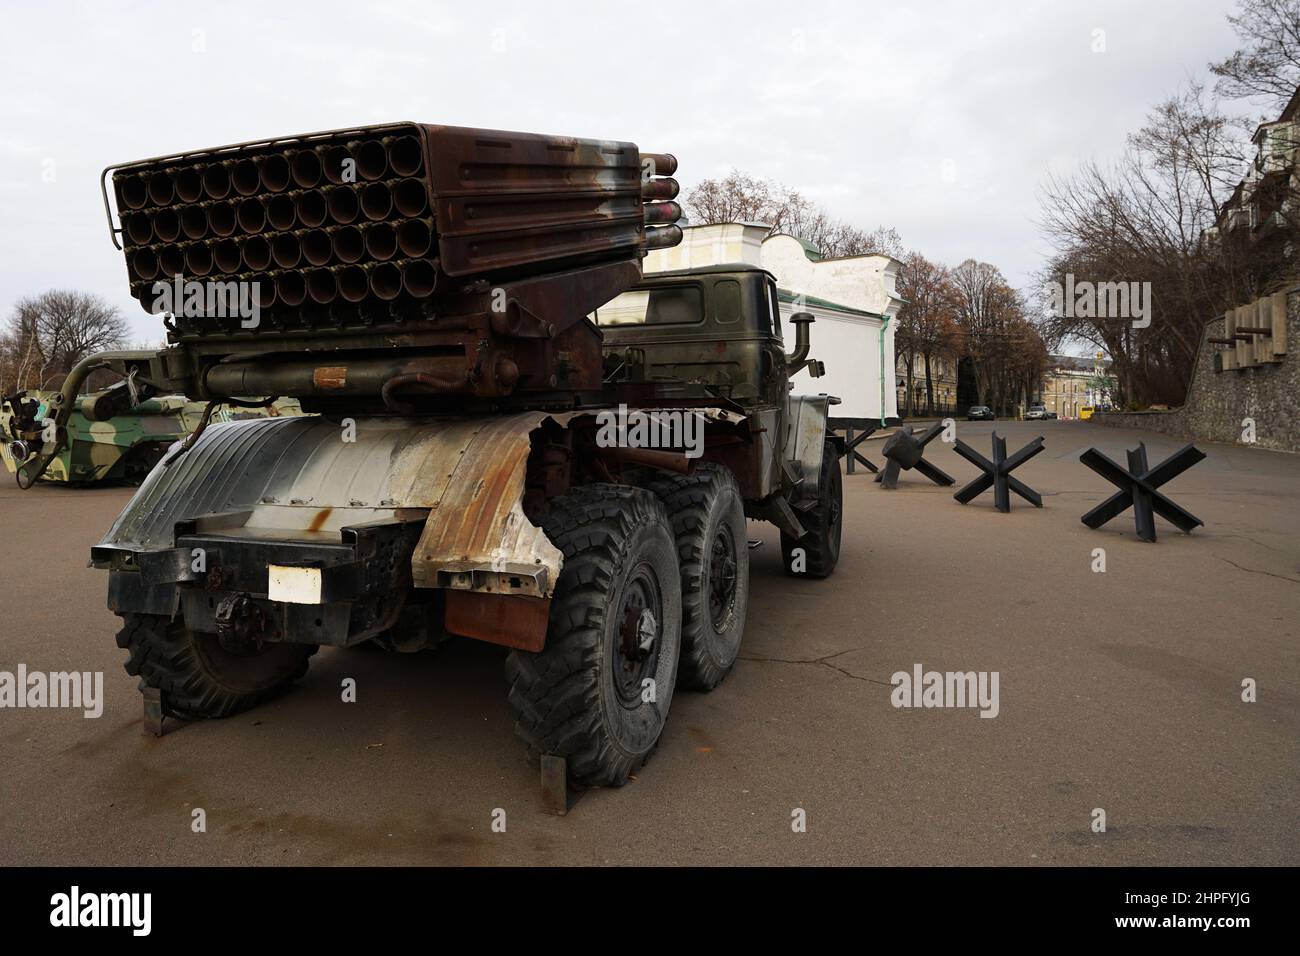 Ukraine Russia conflict war escalation concept, Katyusha multiple rocket launcher army truck with troops on display in Kyiv, Ukraine Stock Photo